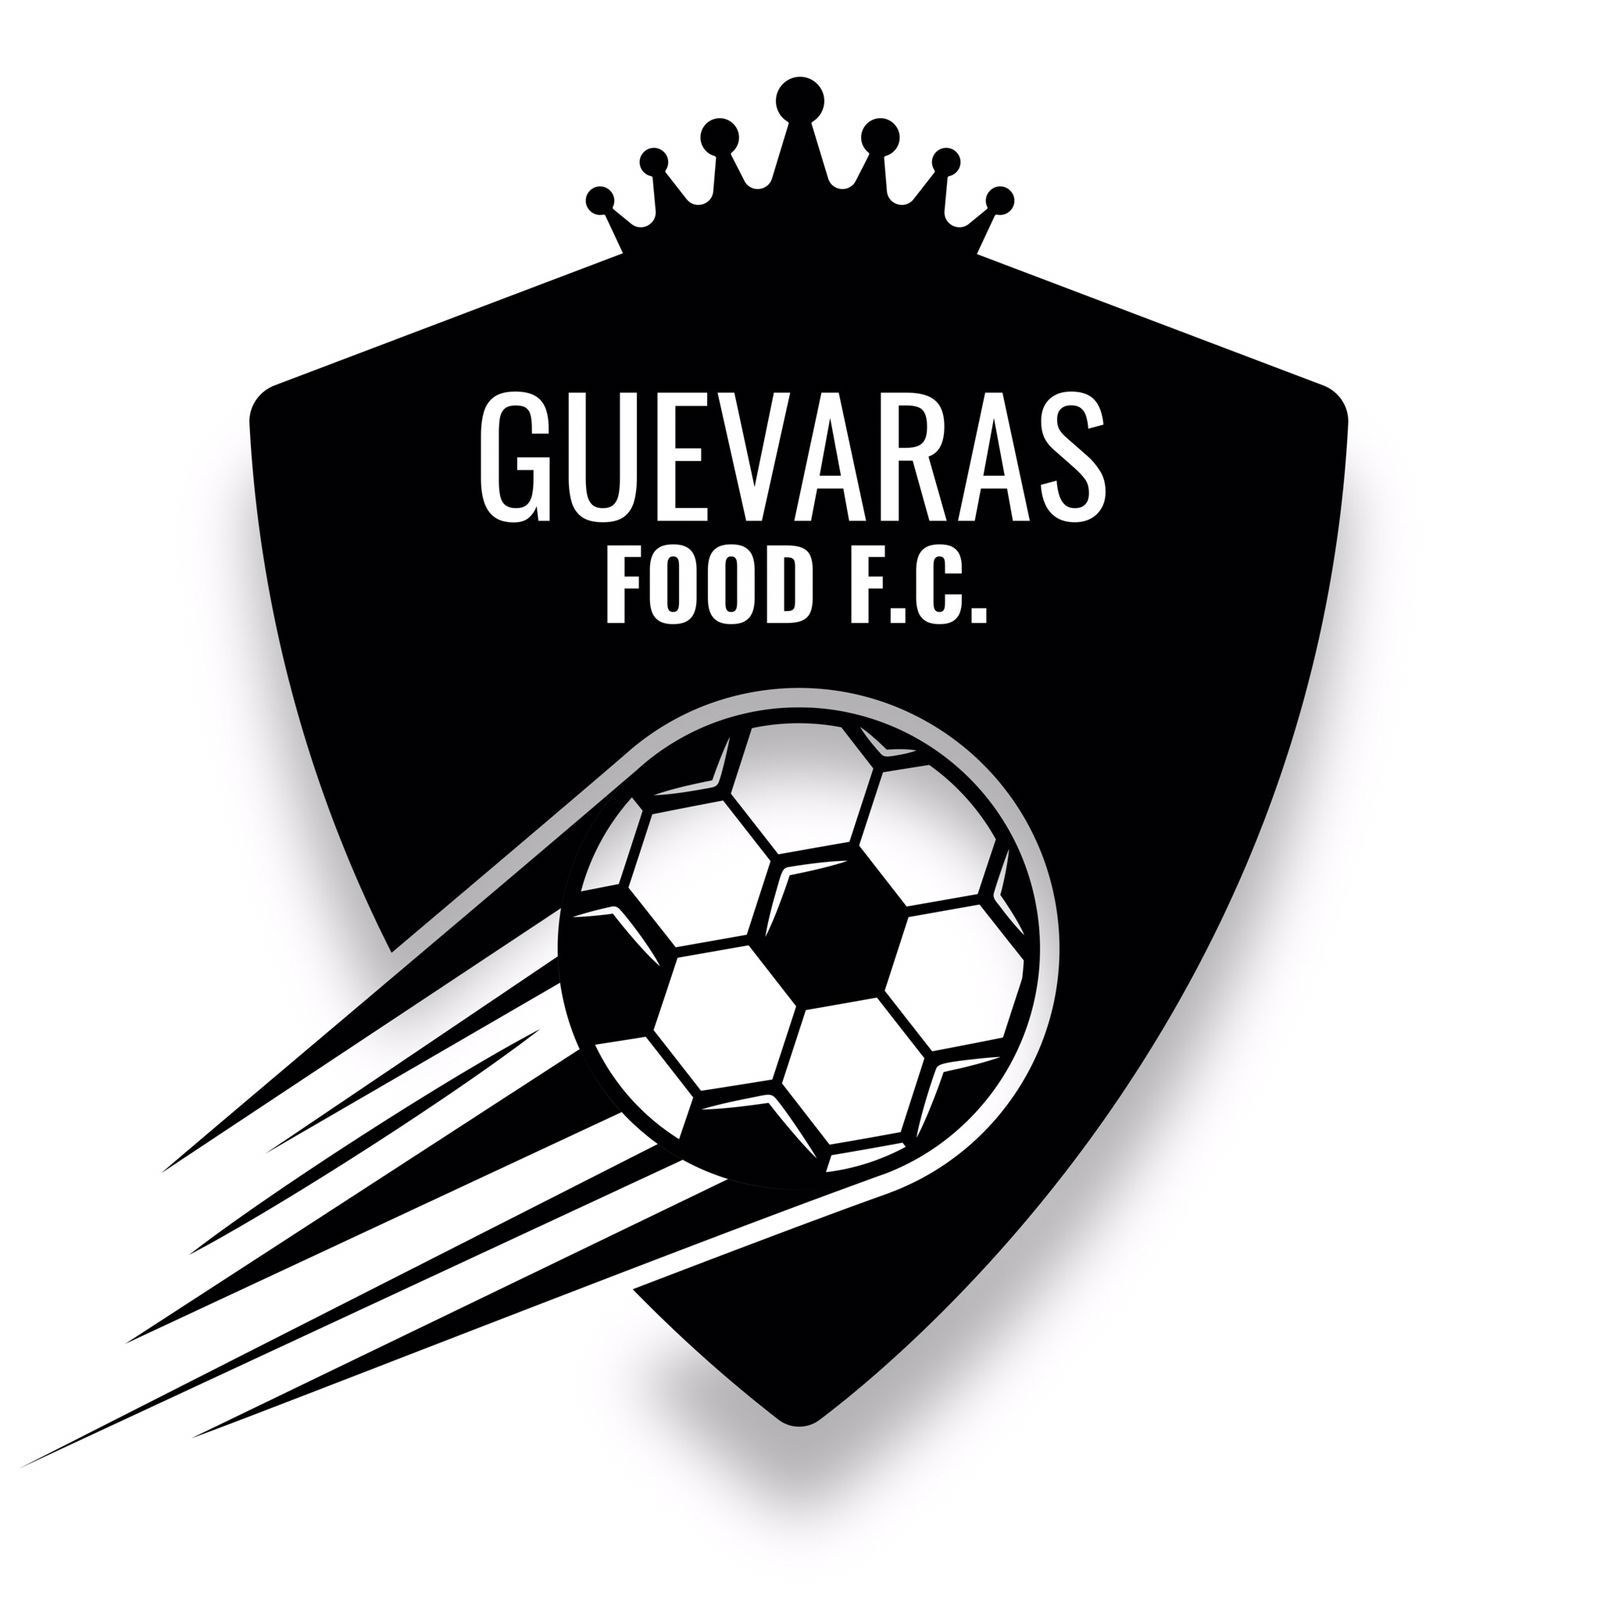 GUEVARAS FOOD F.C